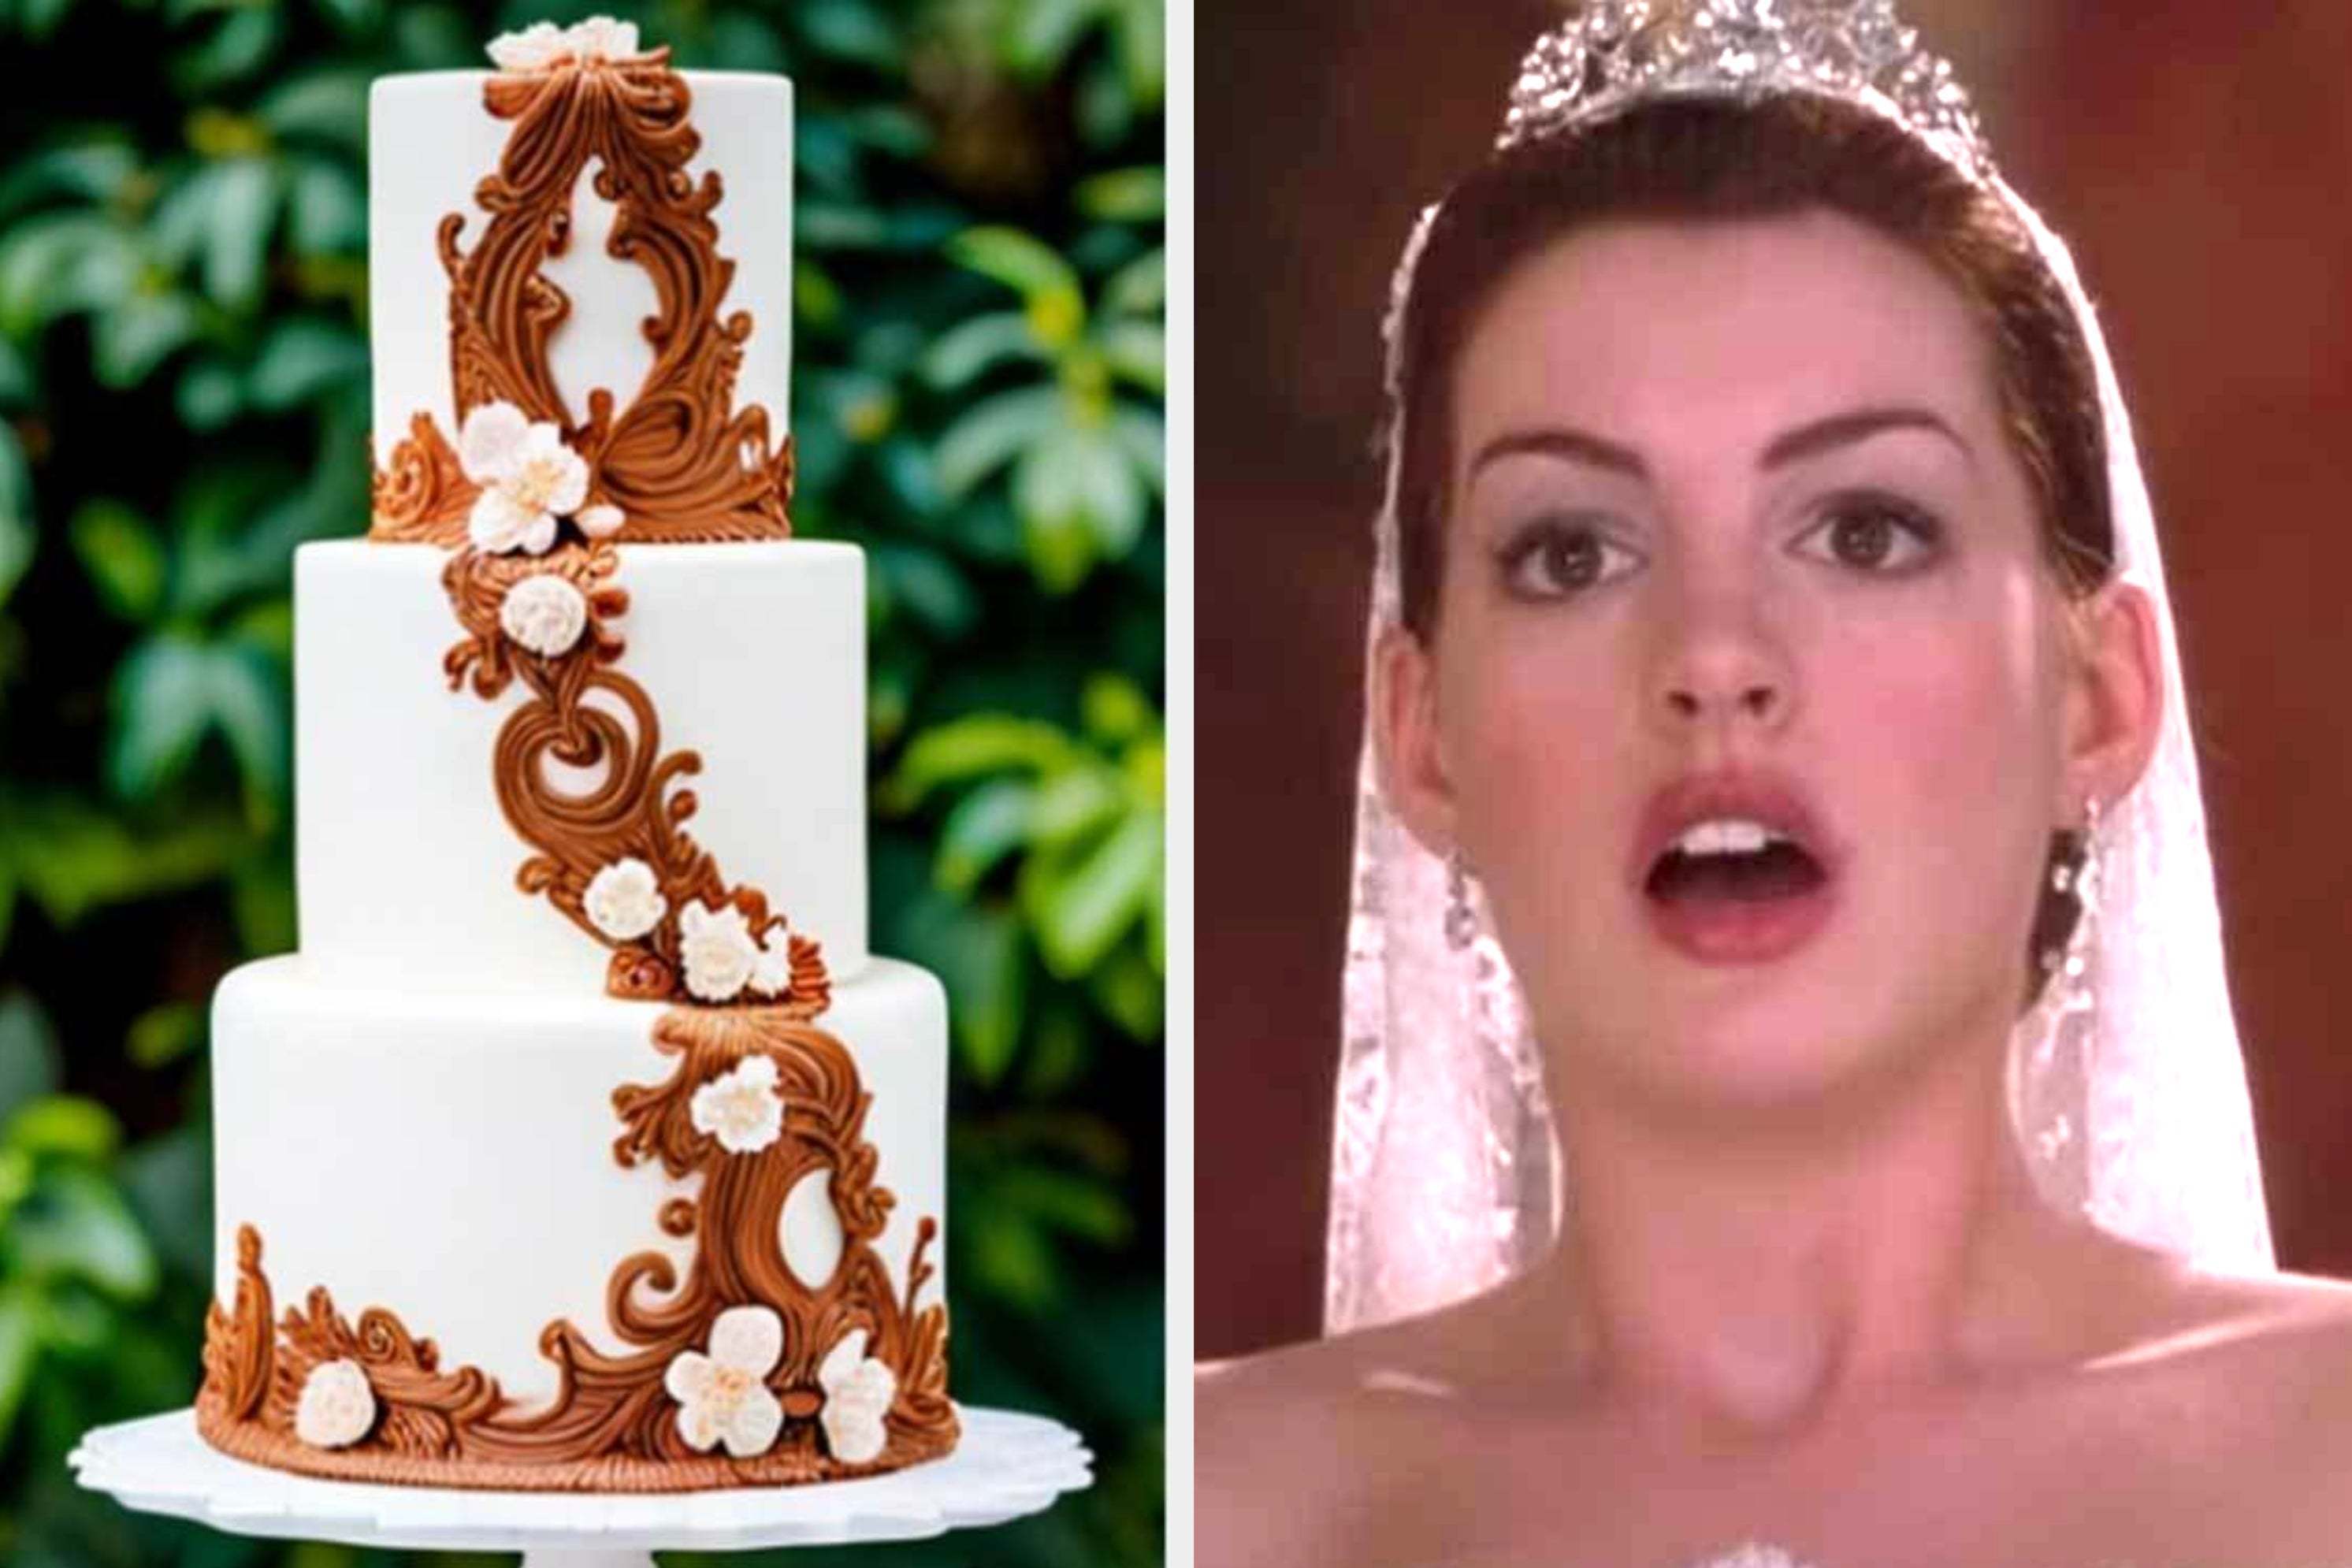 Board Game Wedding Cake  Crazy wedding cakes, Cake games, Cake